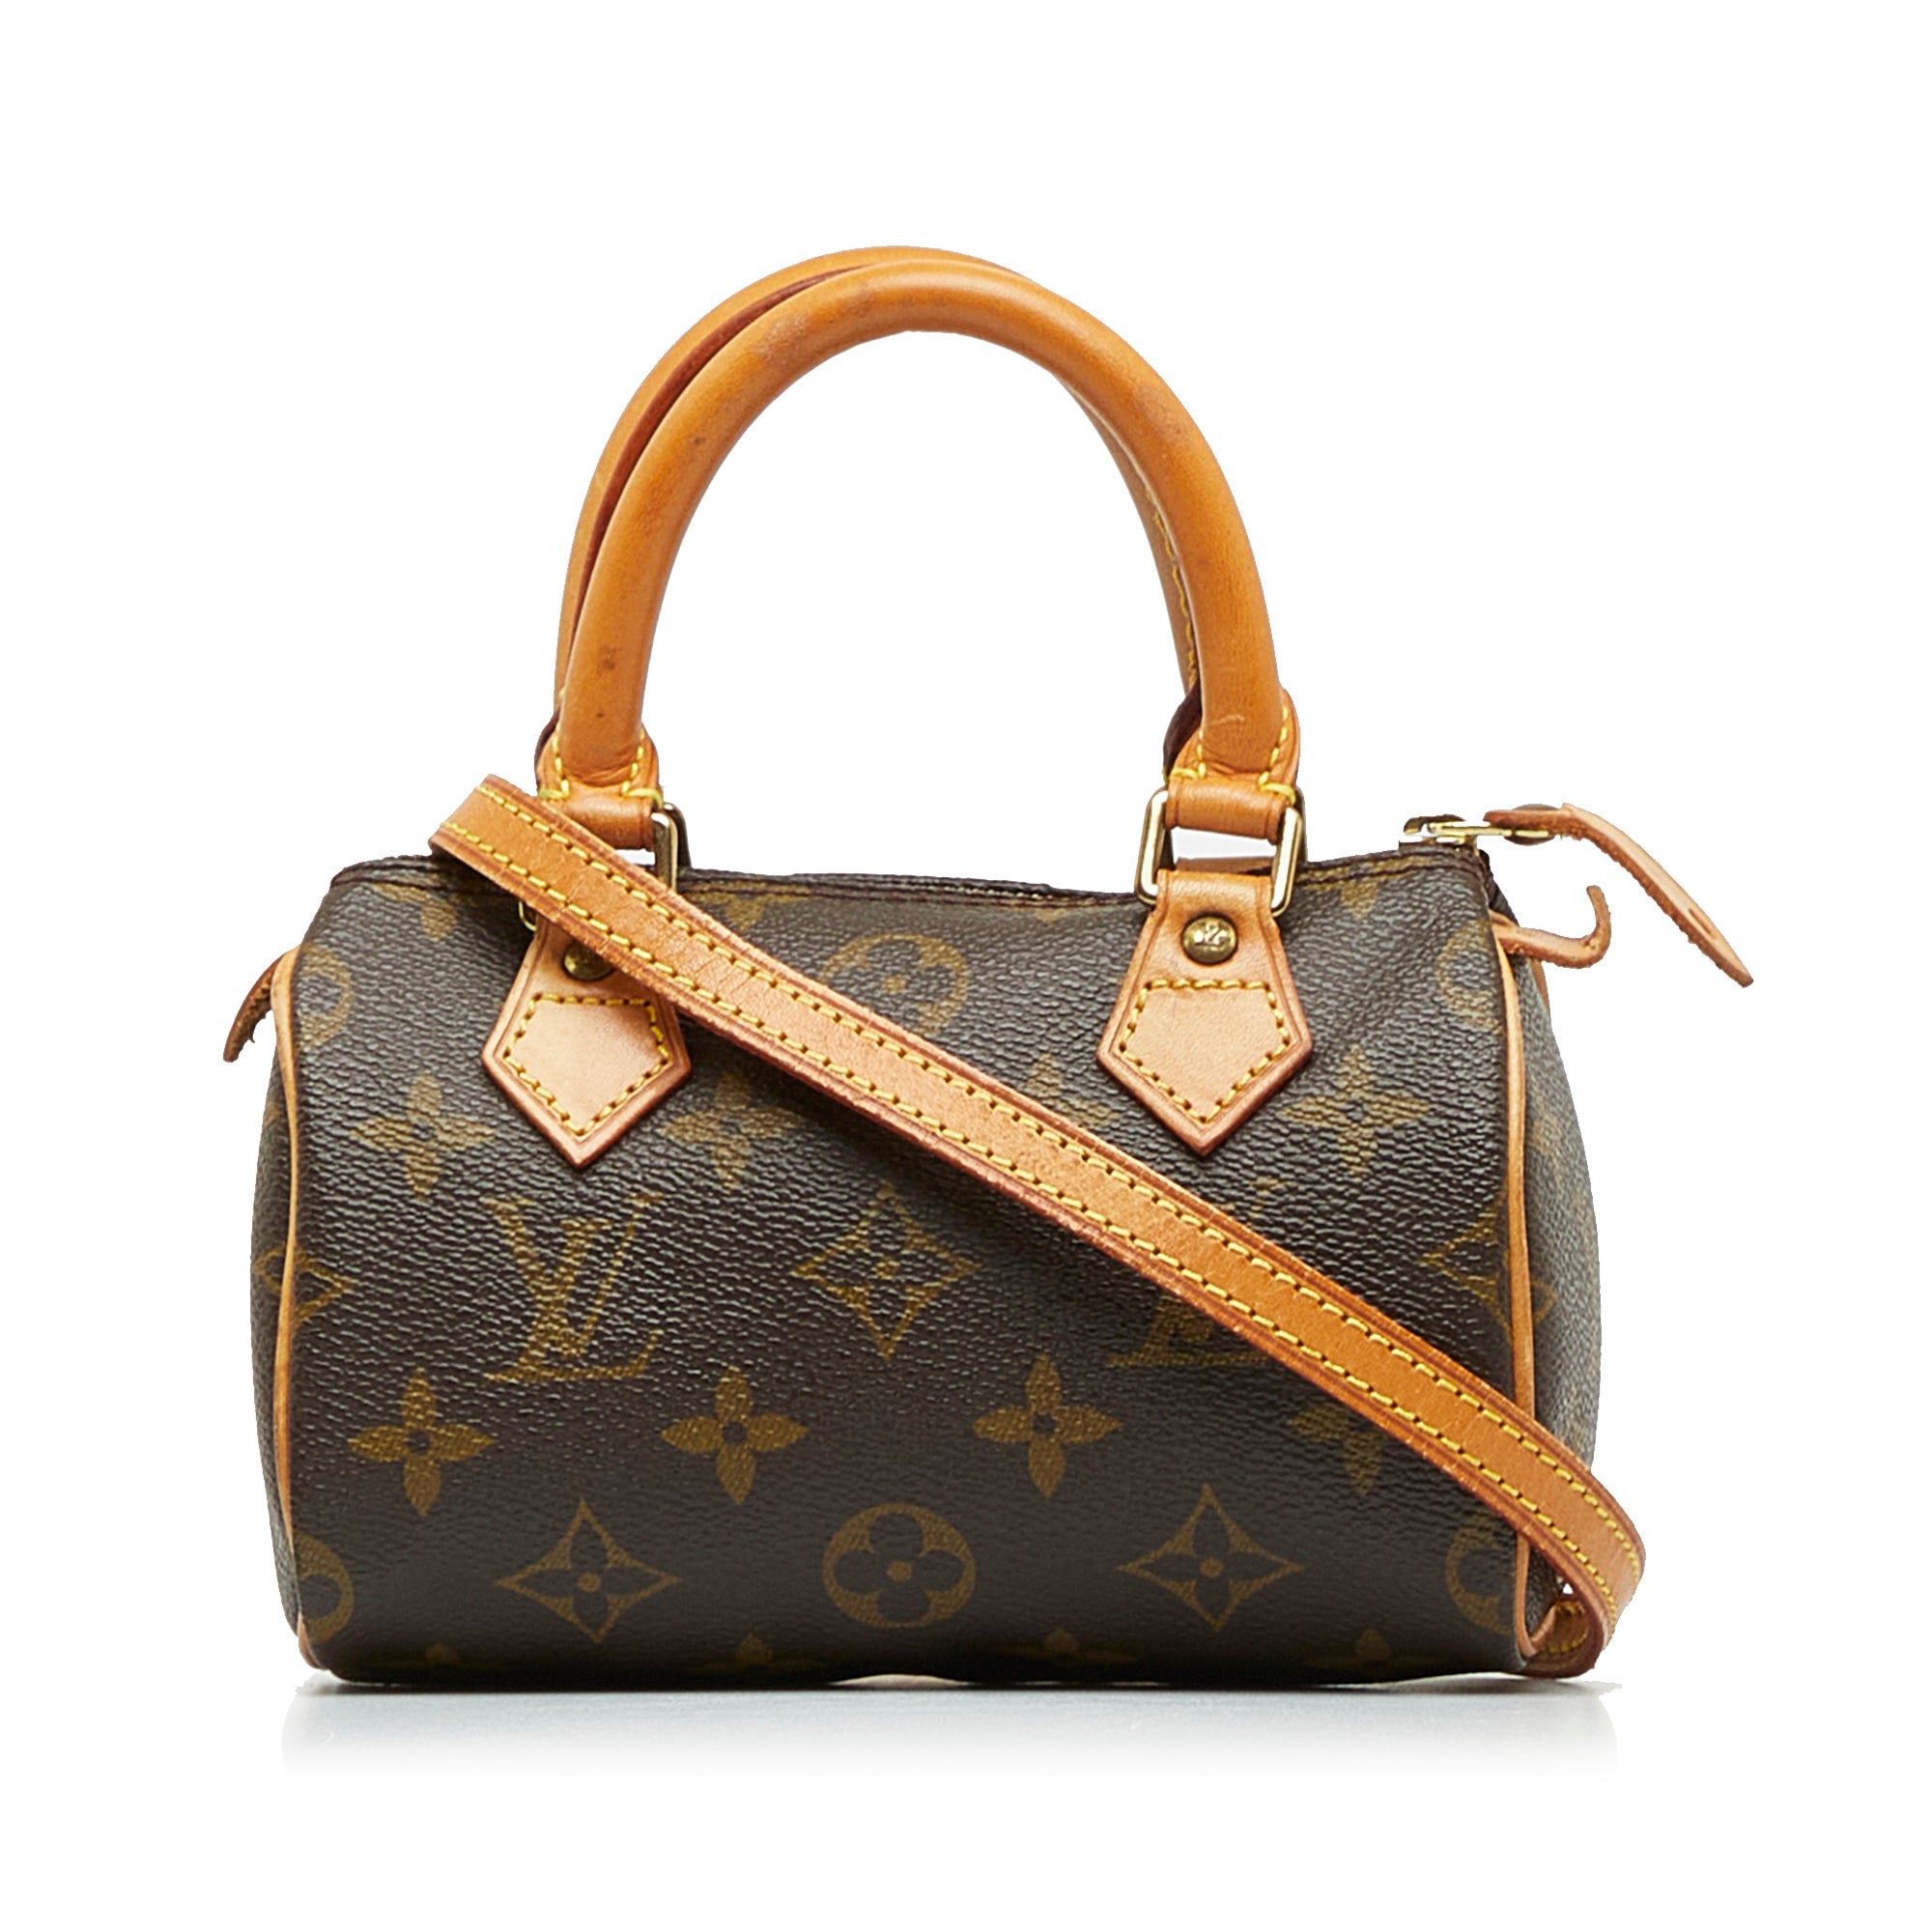 Louis Vuitton Speedy 25 monogram handbag bag satchel top handle